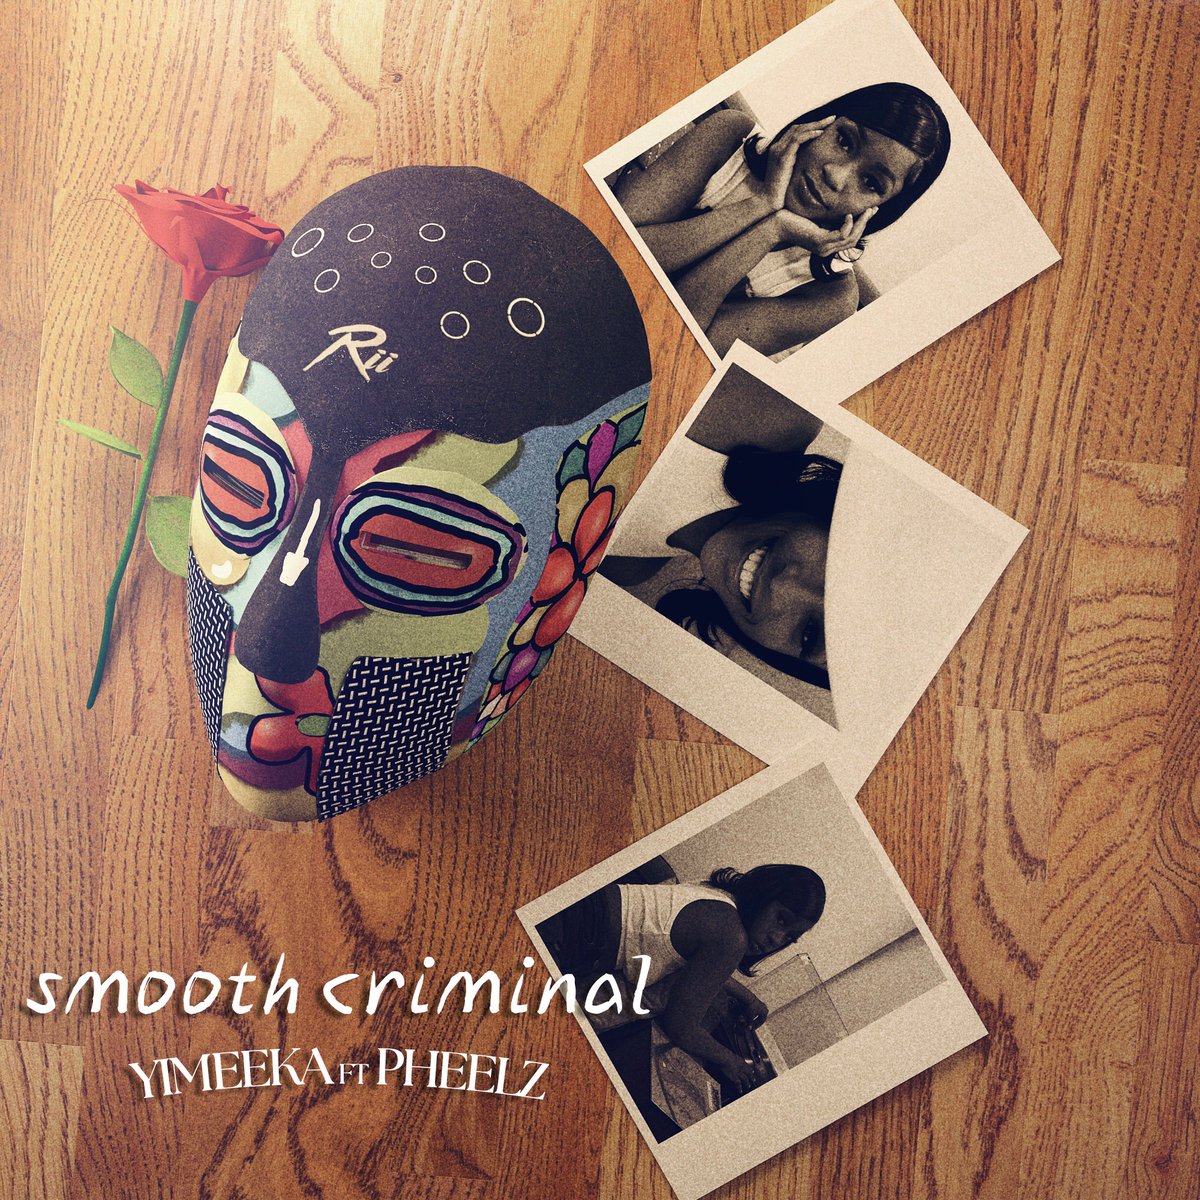 Surrounders; Yimeeka's Smooth Criminal Ft Pheelz Peaked at No23 on iTunes, France Chart 🇫🇷